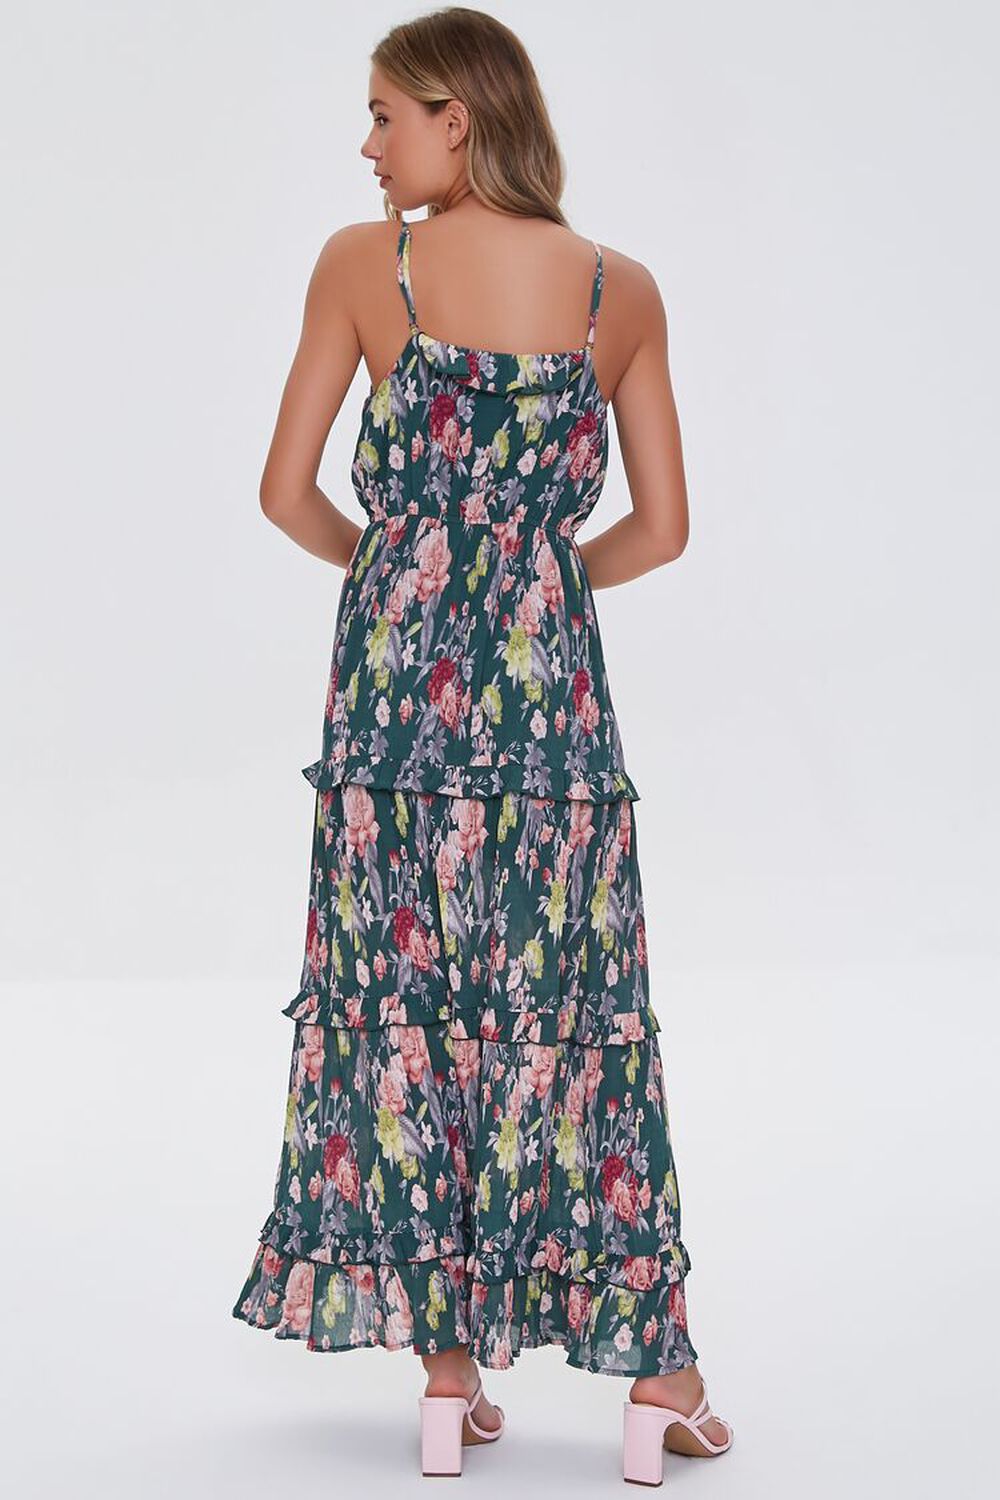 HUNTER GREEN/MULTI Floral Print Maxi Dress, image 3